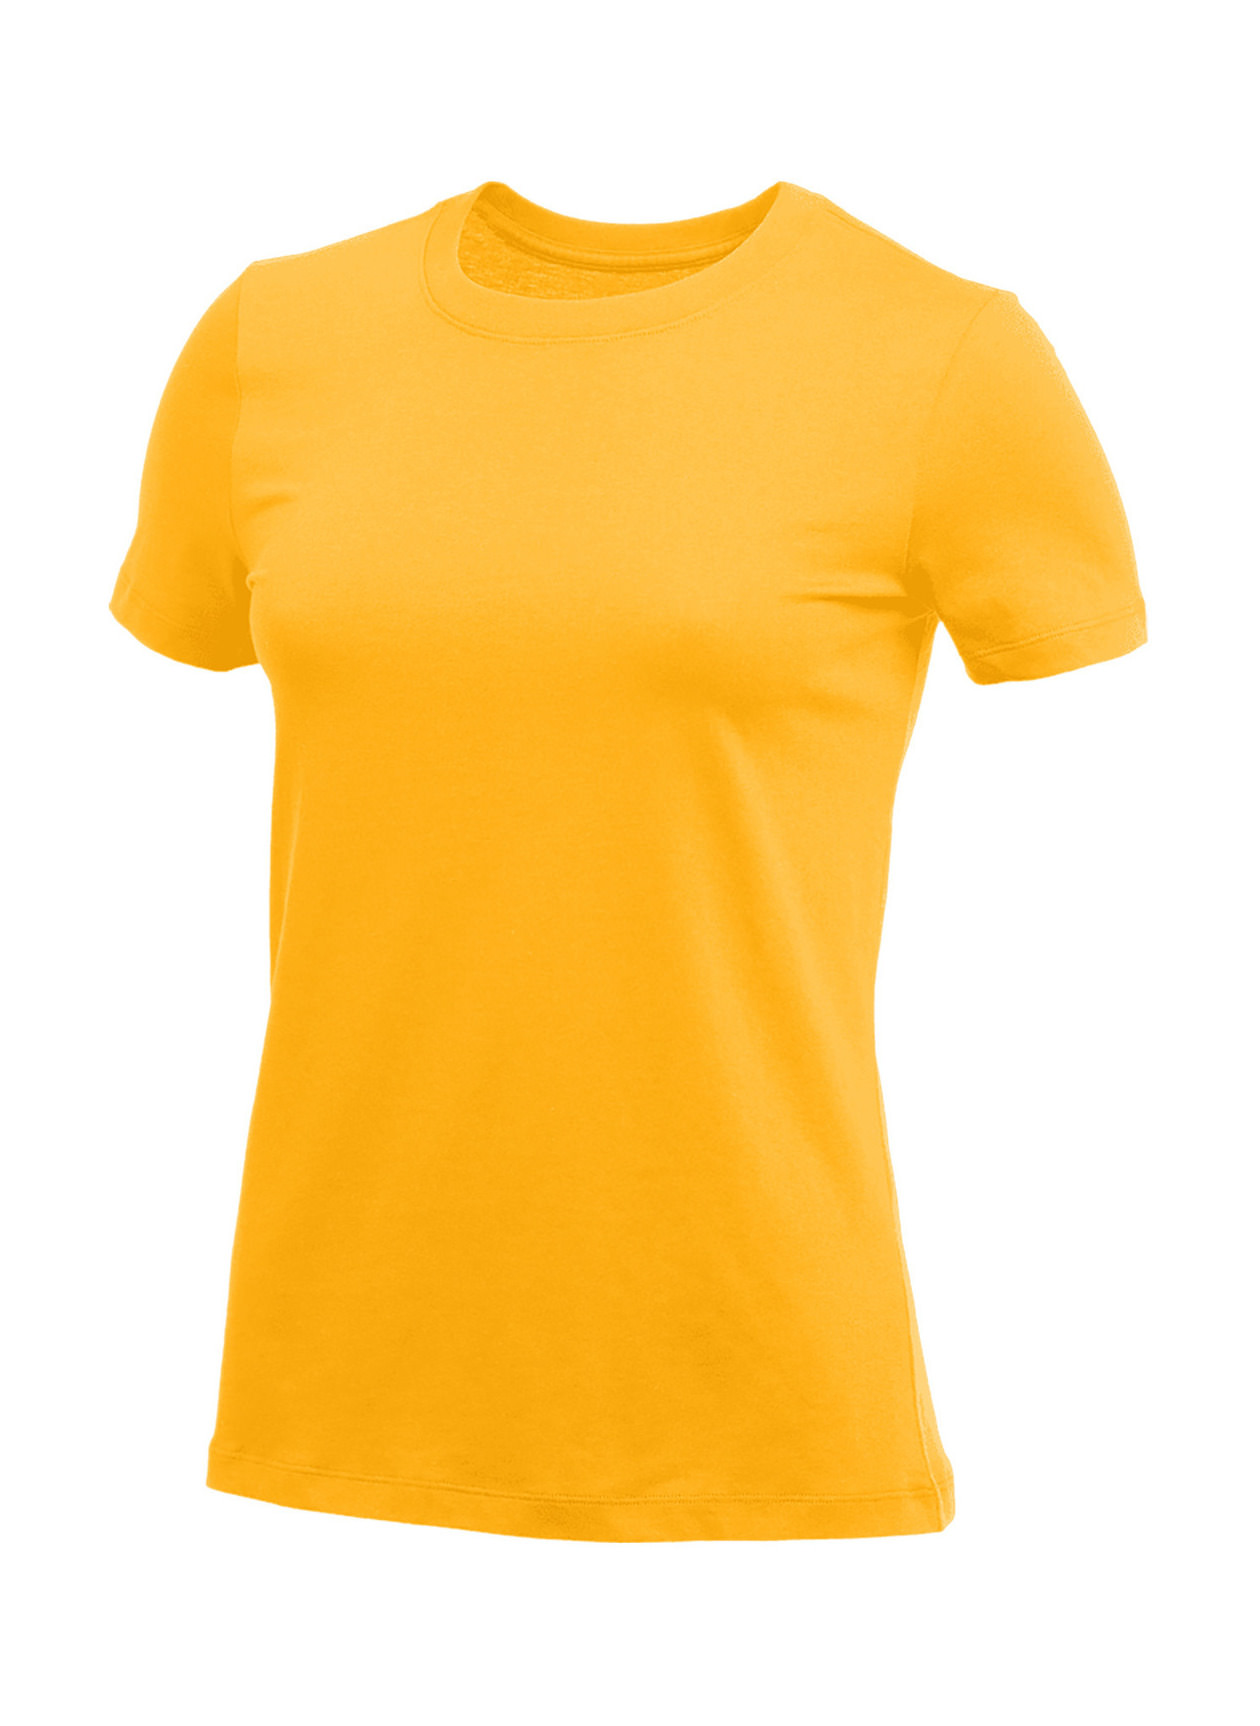 Nike Women's University Gold T-Shirt